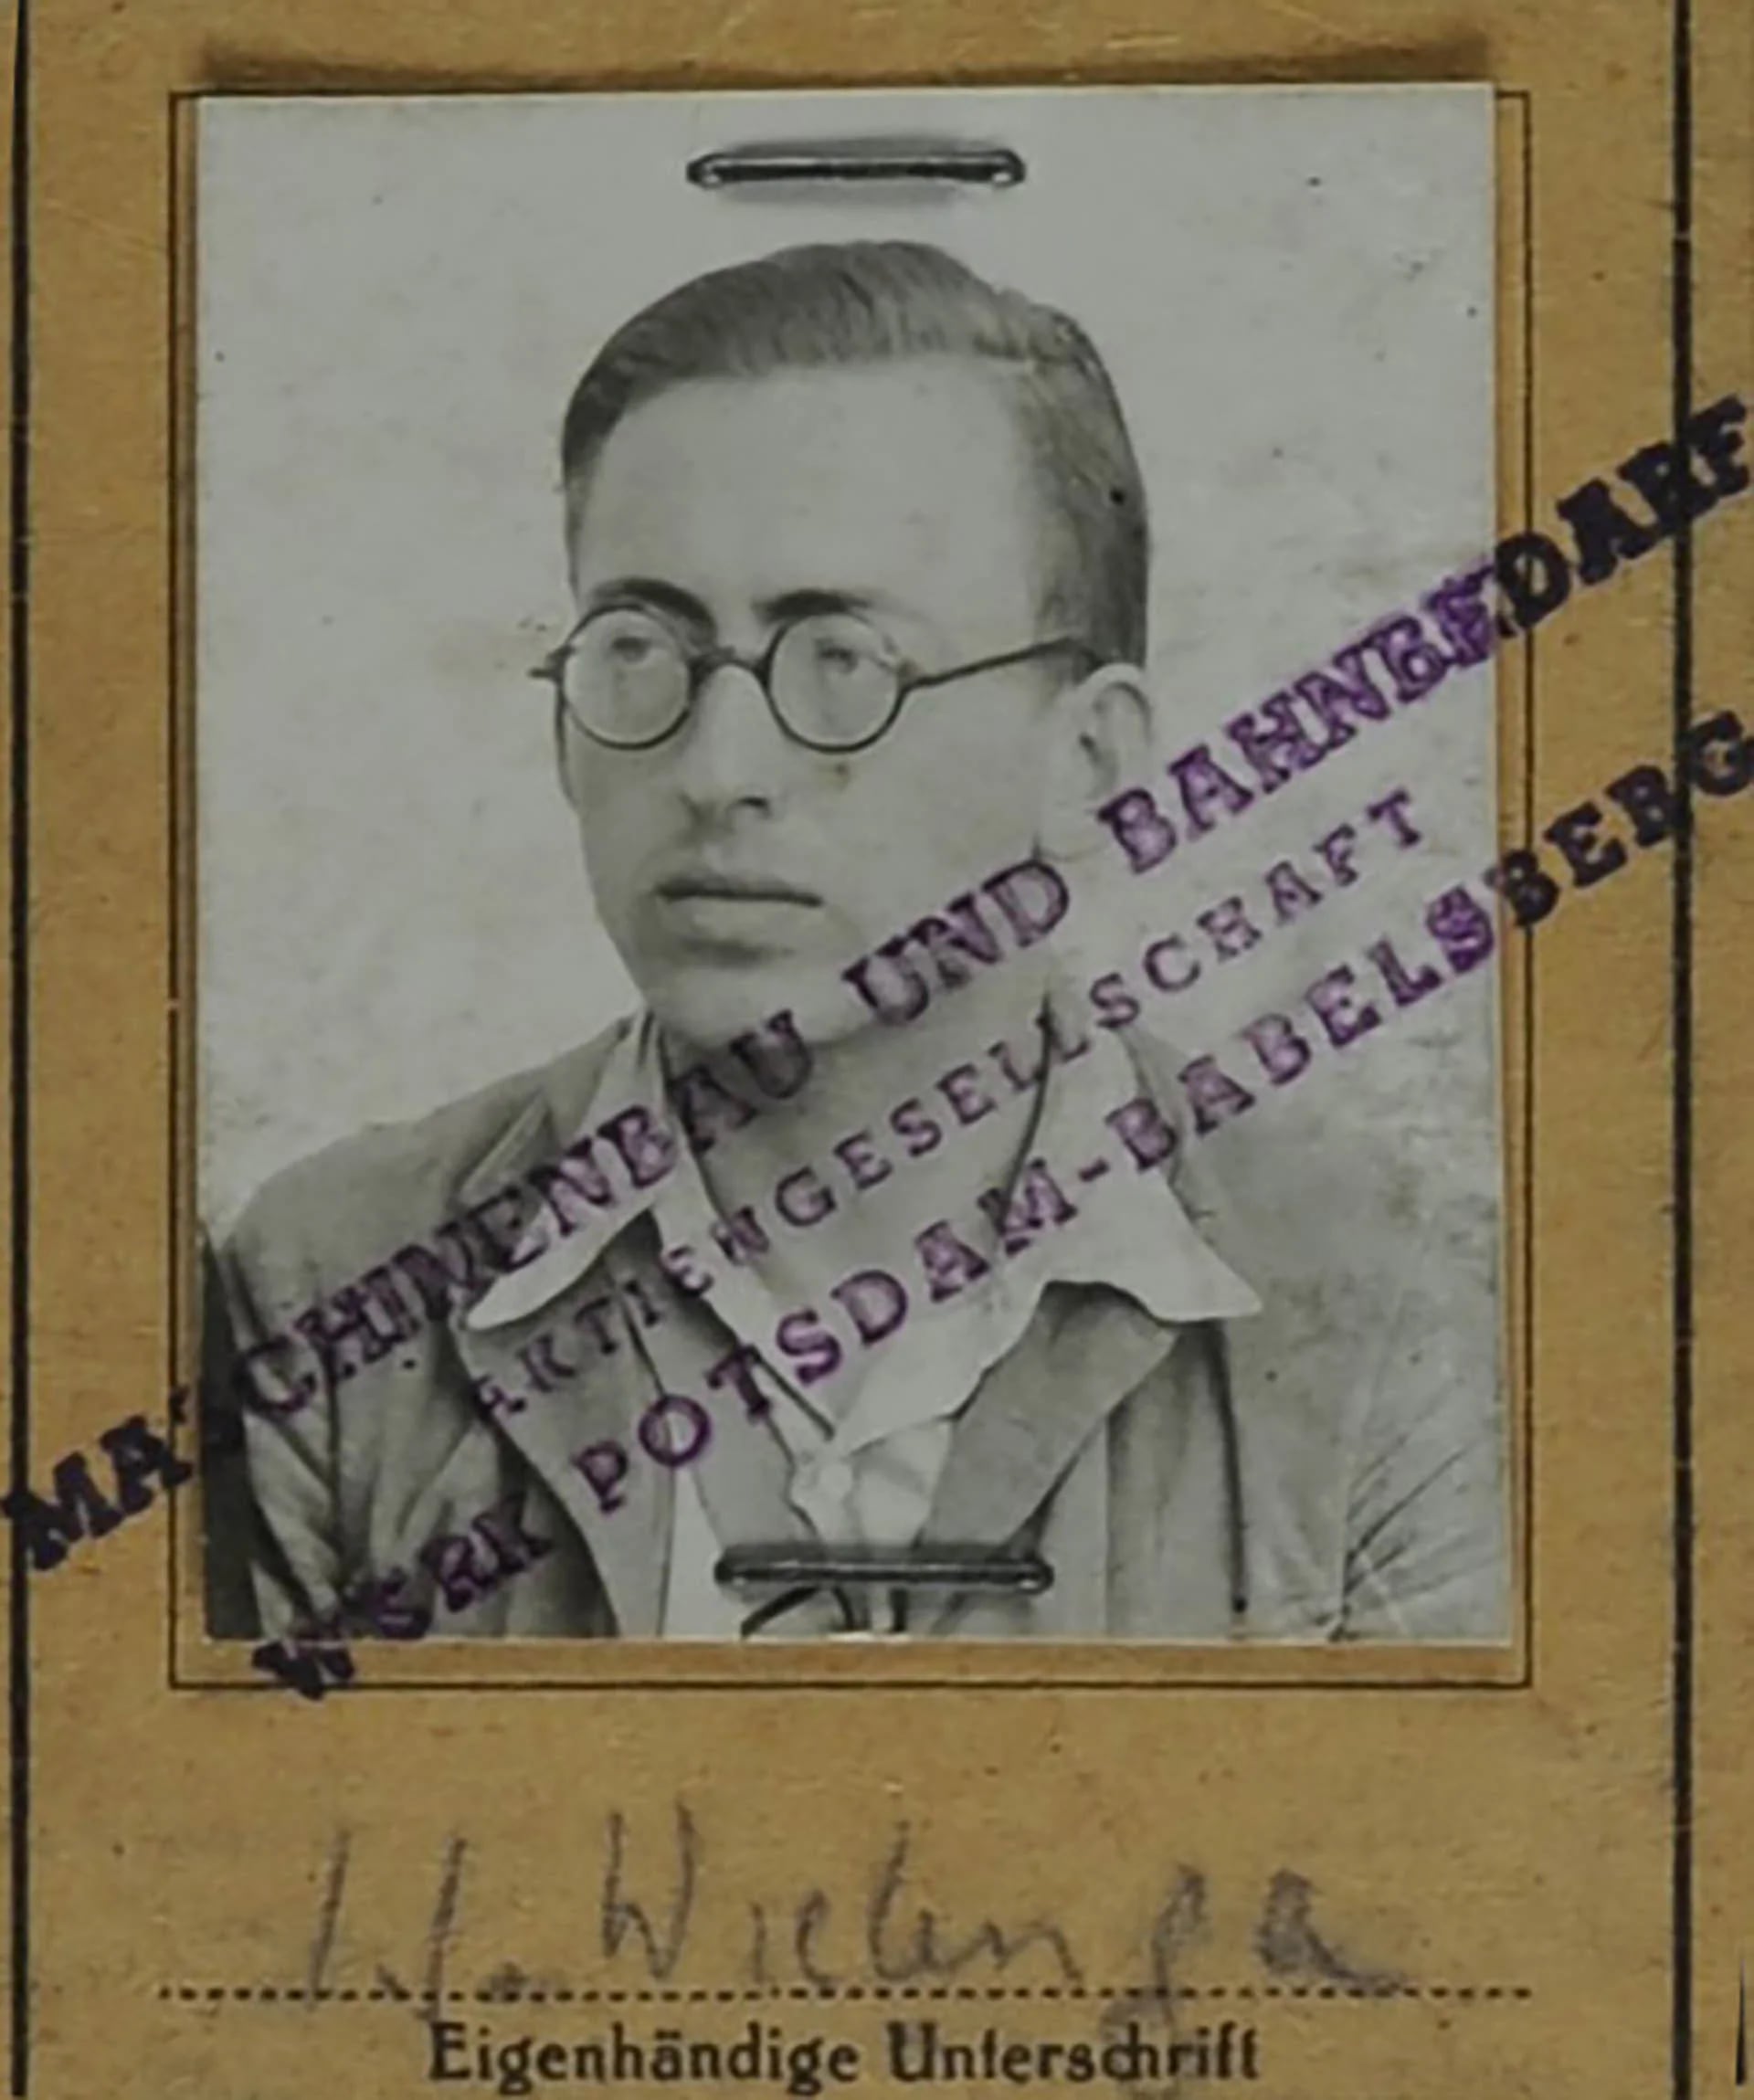 J. Wielenga según su falso documento de identidad, Ernst-Menahem Rozen de nacimiento. (Yad Vashem)